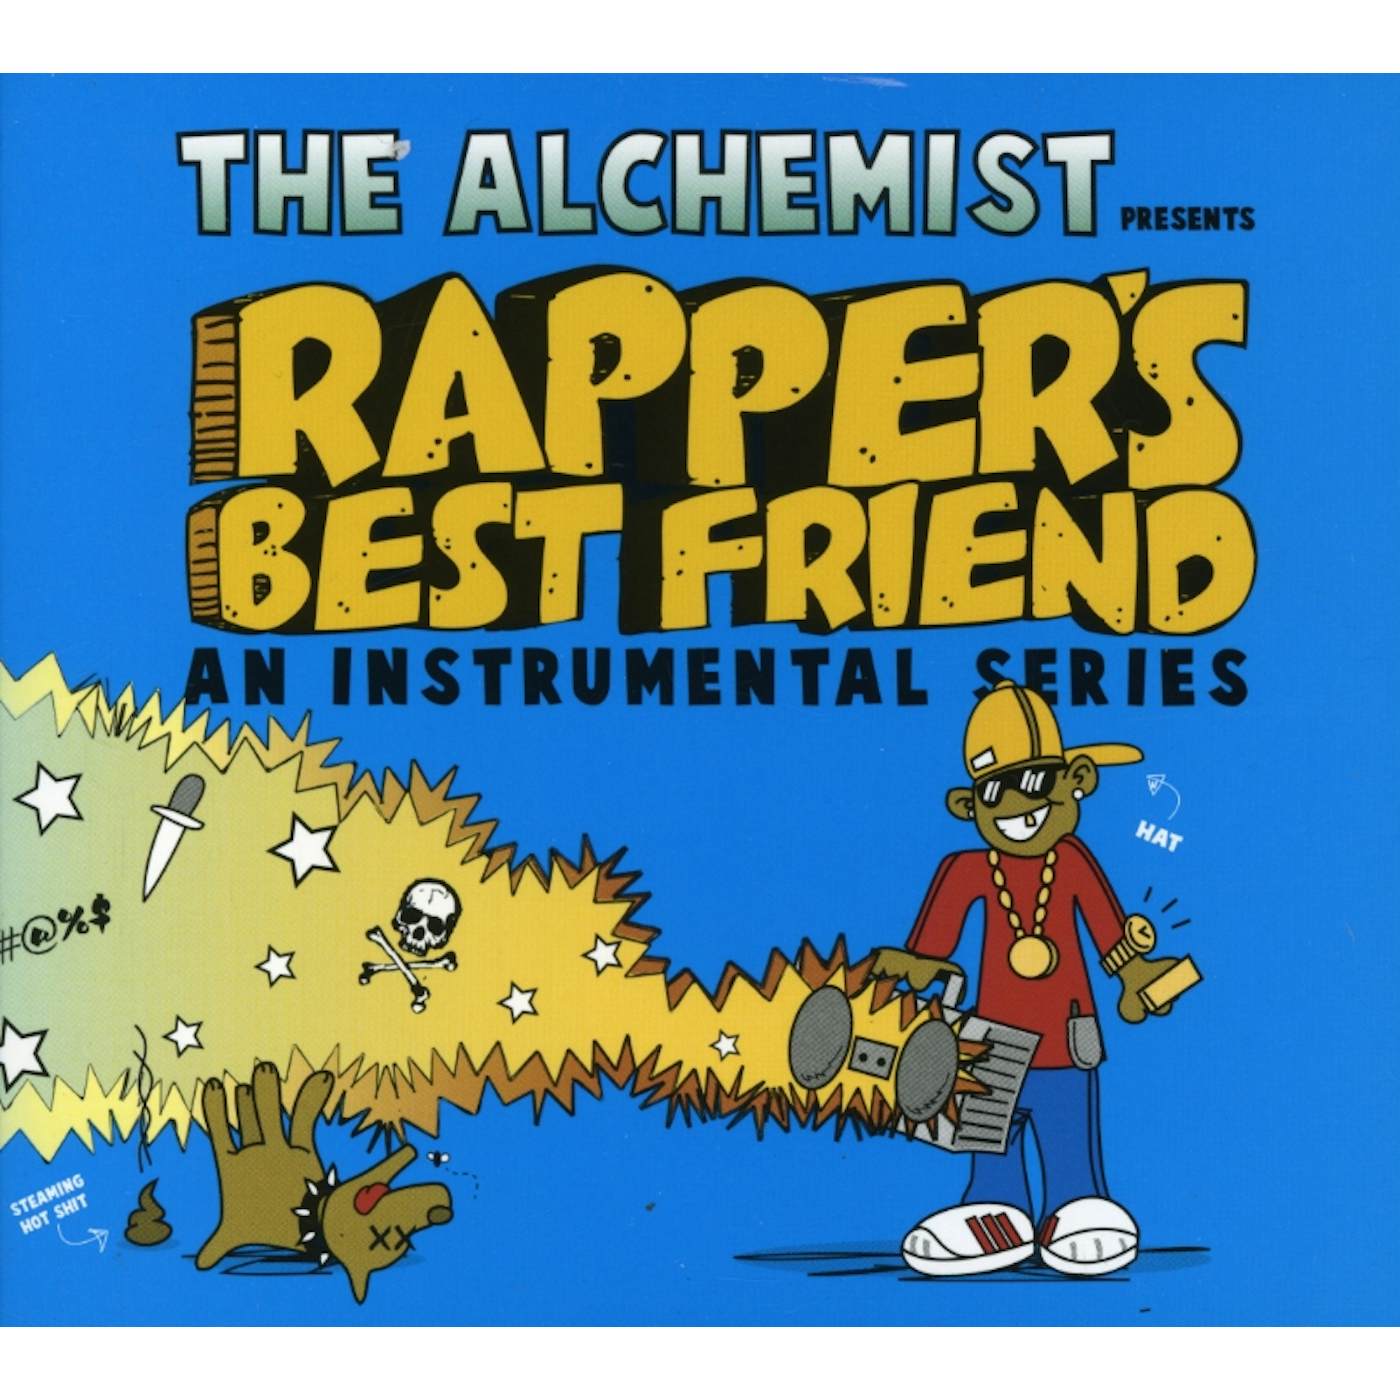 The Alchemist RAPPER'S BEST BEST FRIEND: AN INSTRUMENTAL SERIES CD